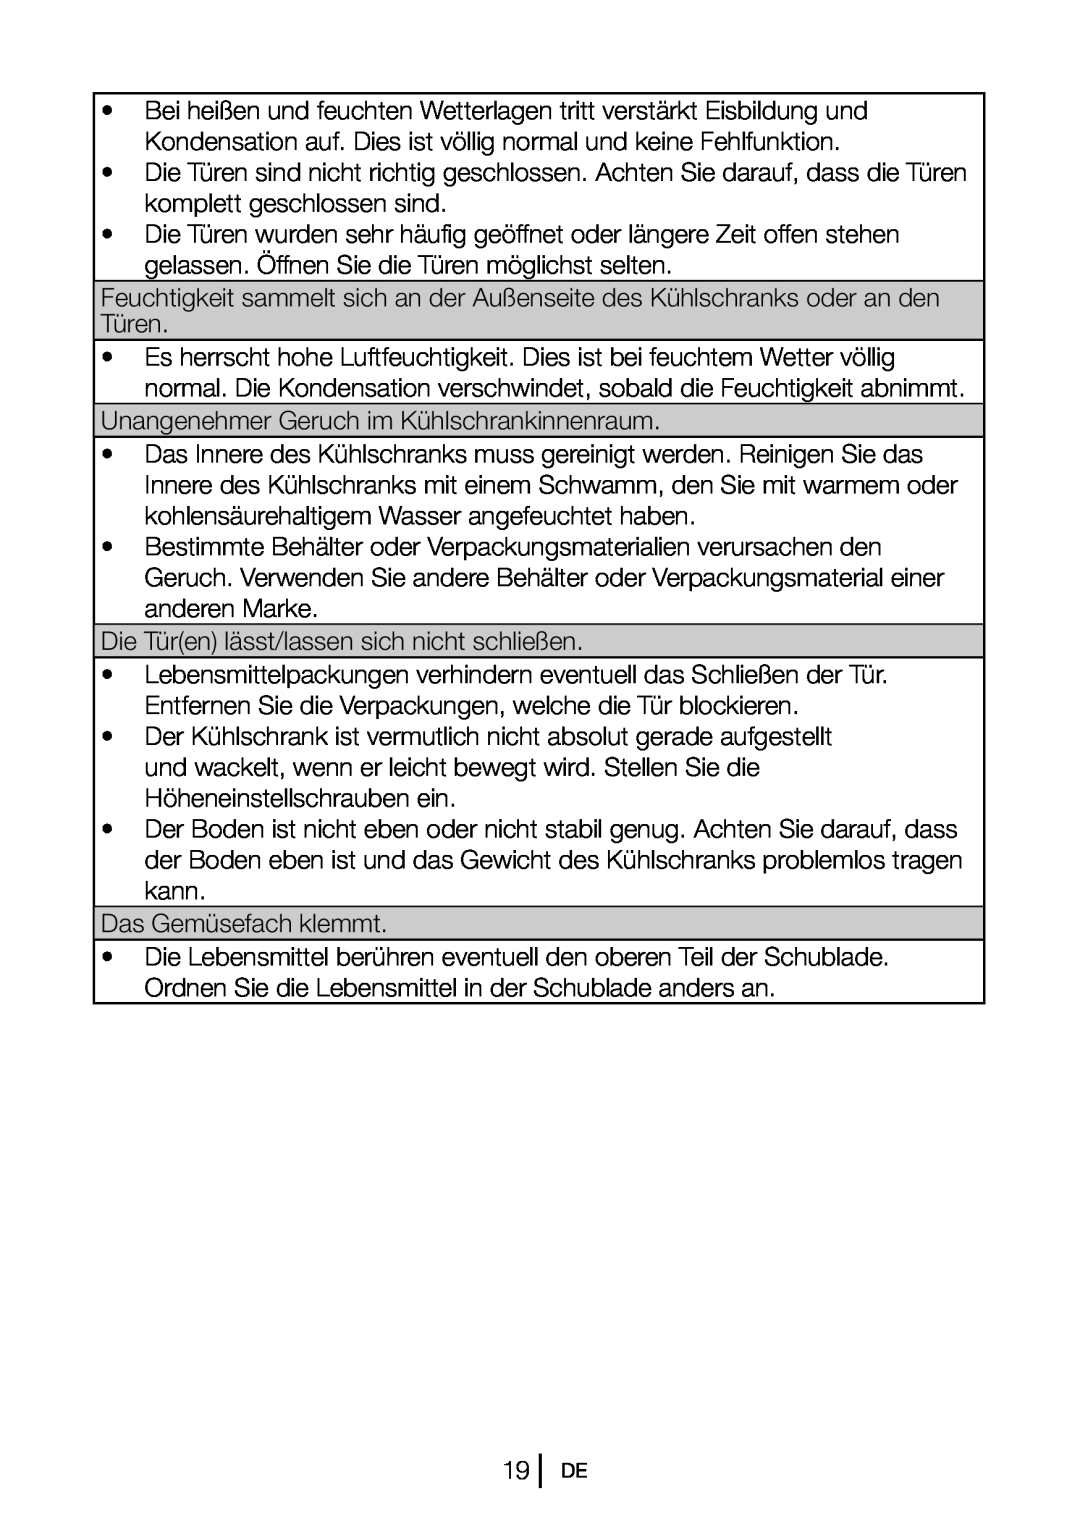 Blomberg DSM 9651 A+ manual Unangenehmer Geruch im Kühlschrankinnenraum 